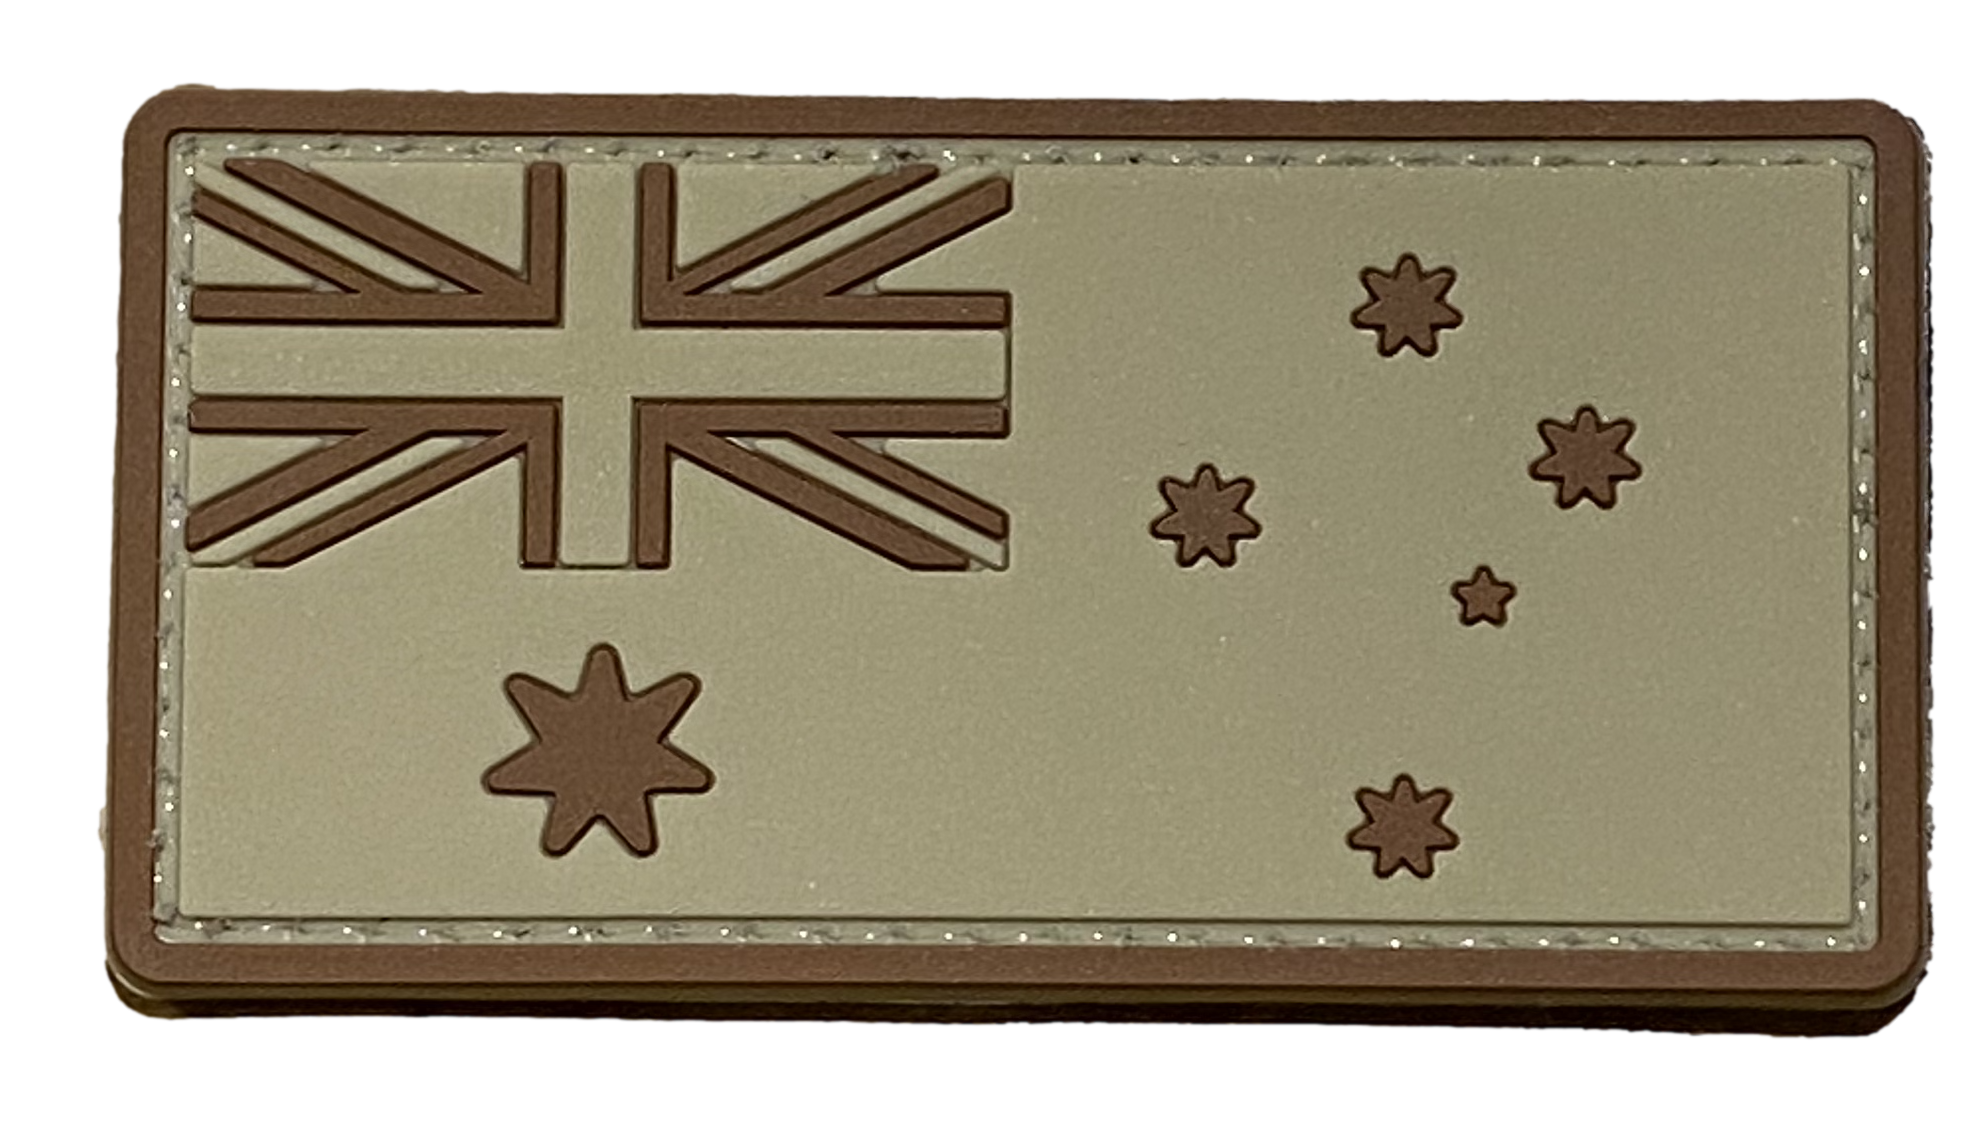 Australian Flag - Tan - Patch